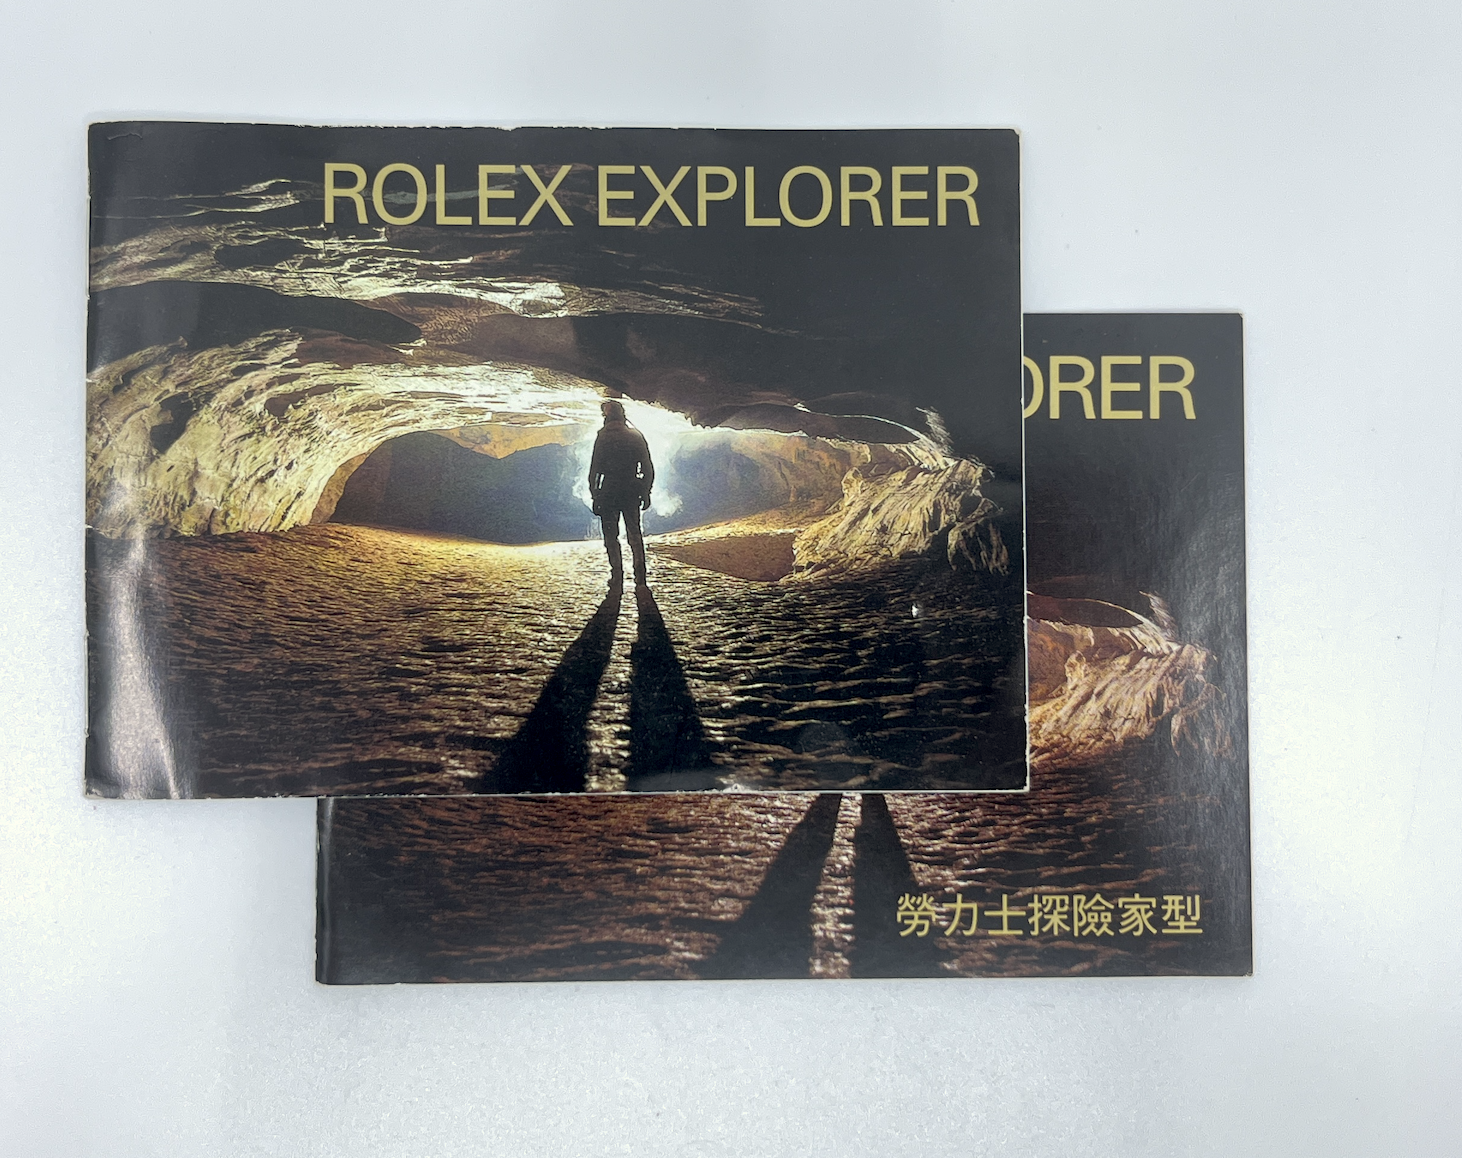 pre owned Rolex EXPLORER Booklet